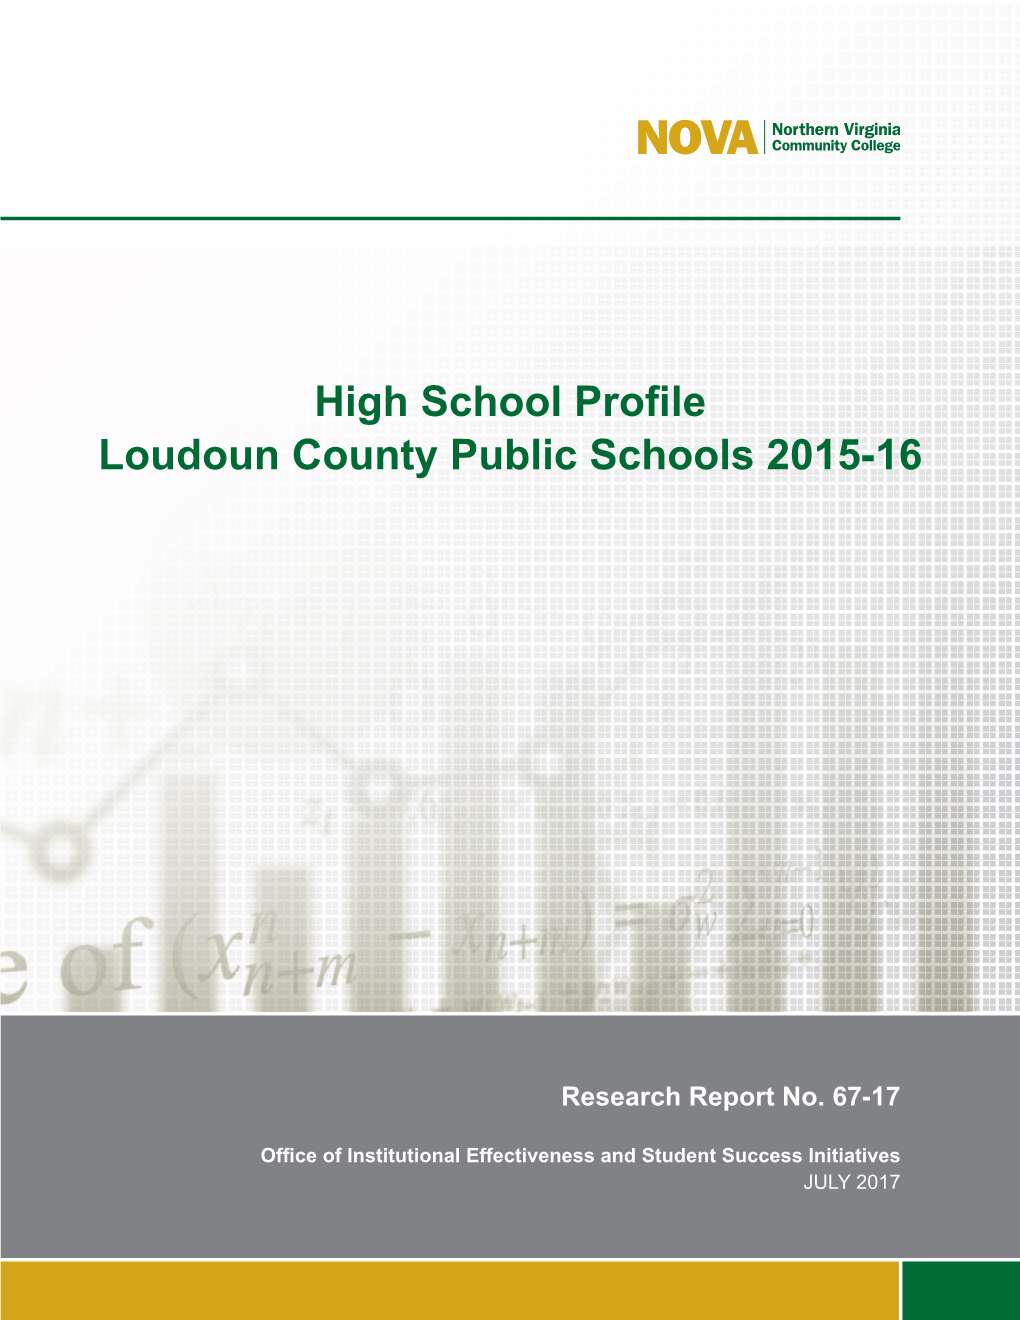 High School Profile Loudoun County Public Schools 2015-16